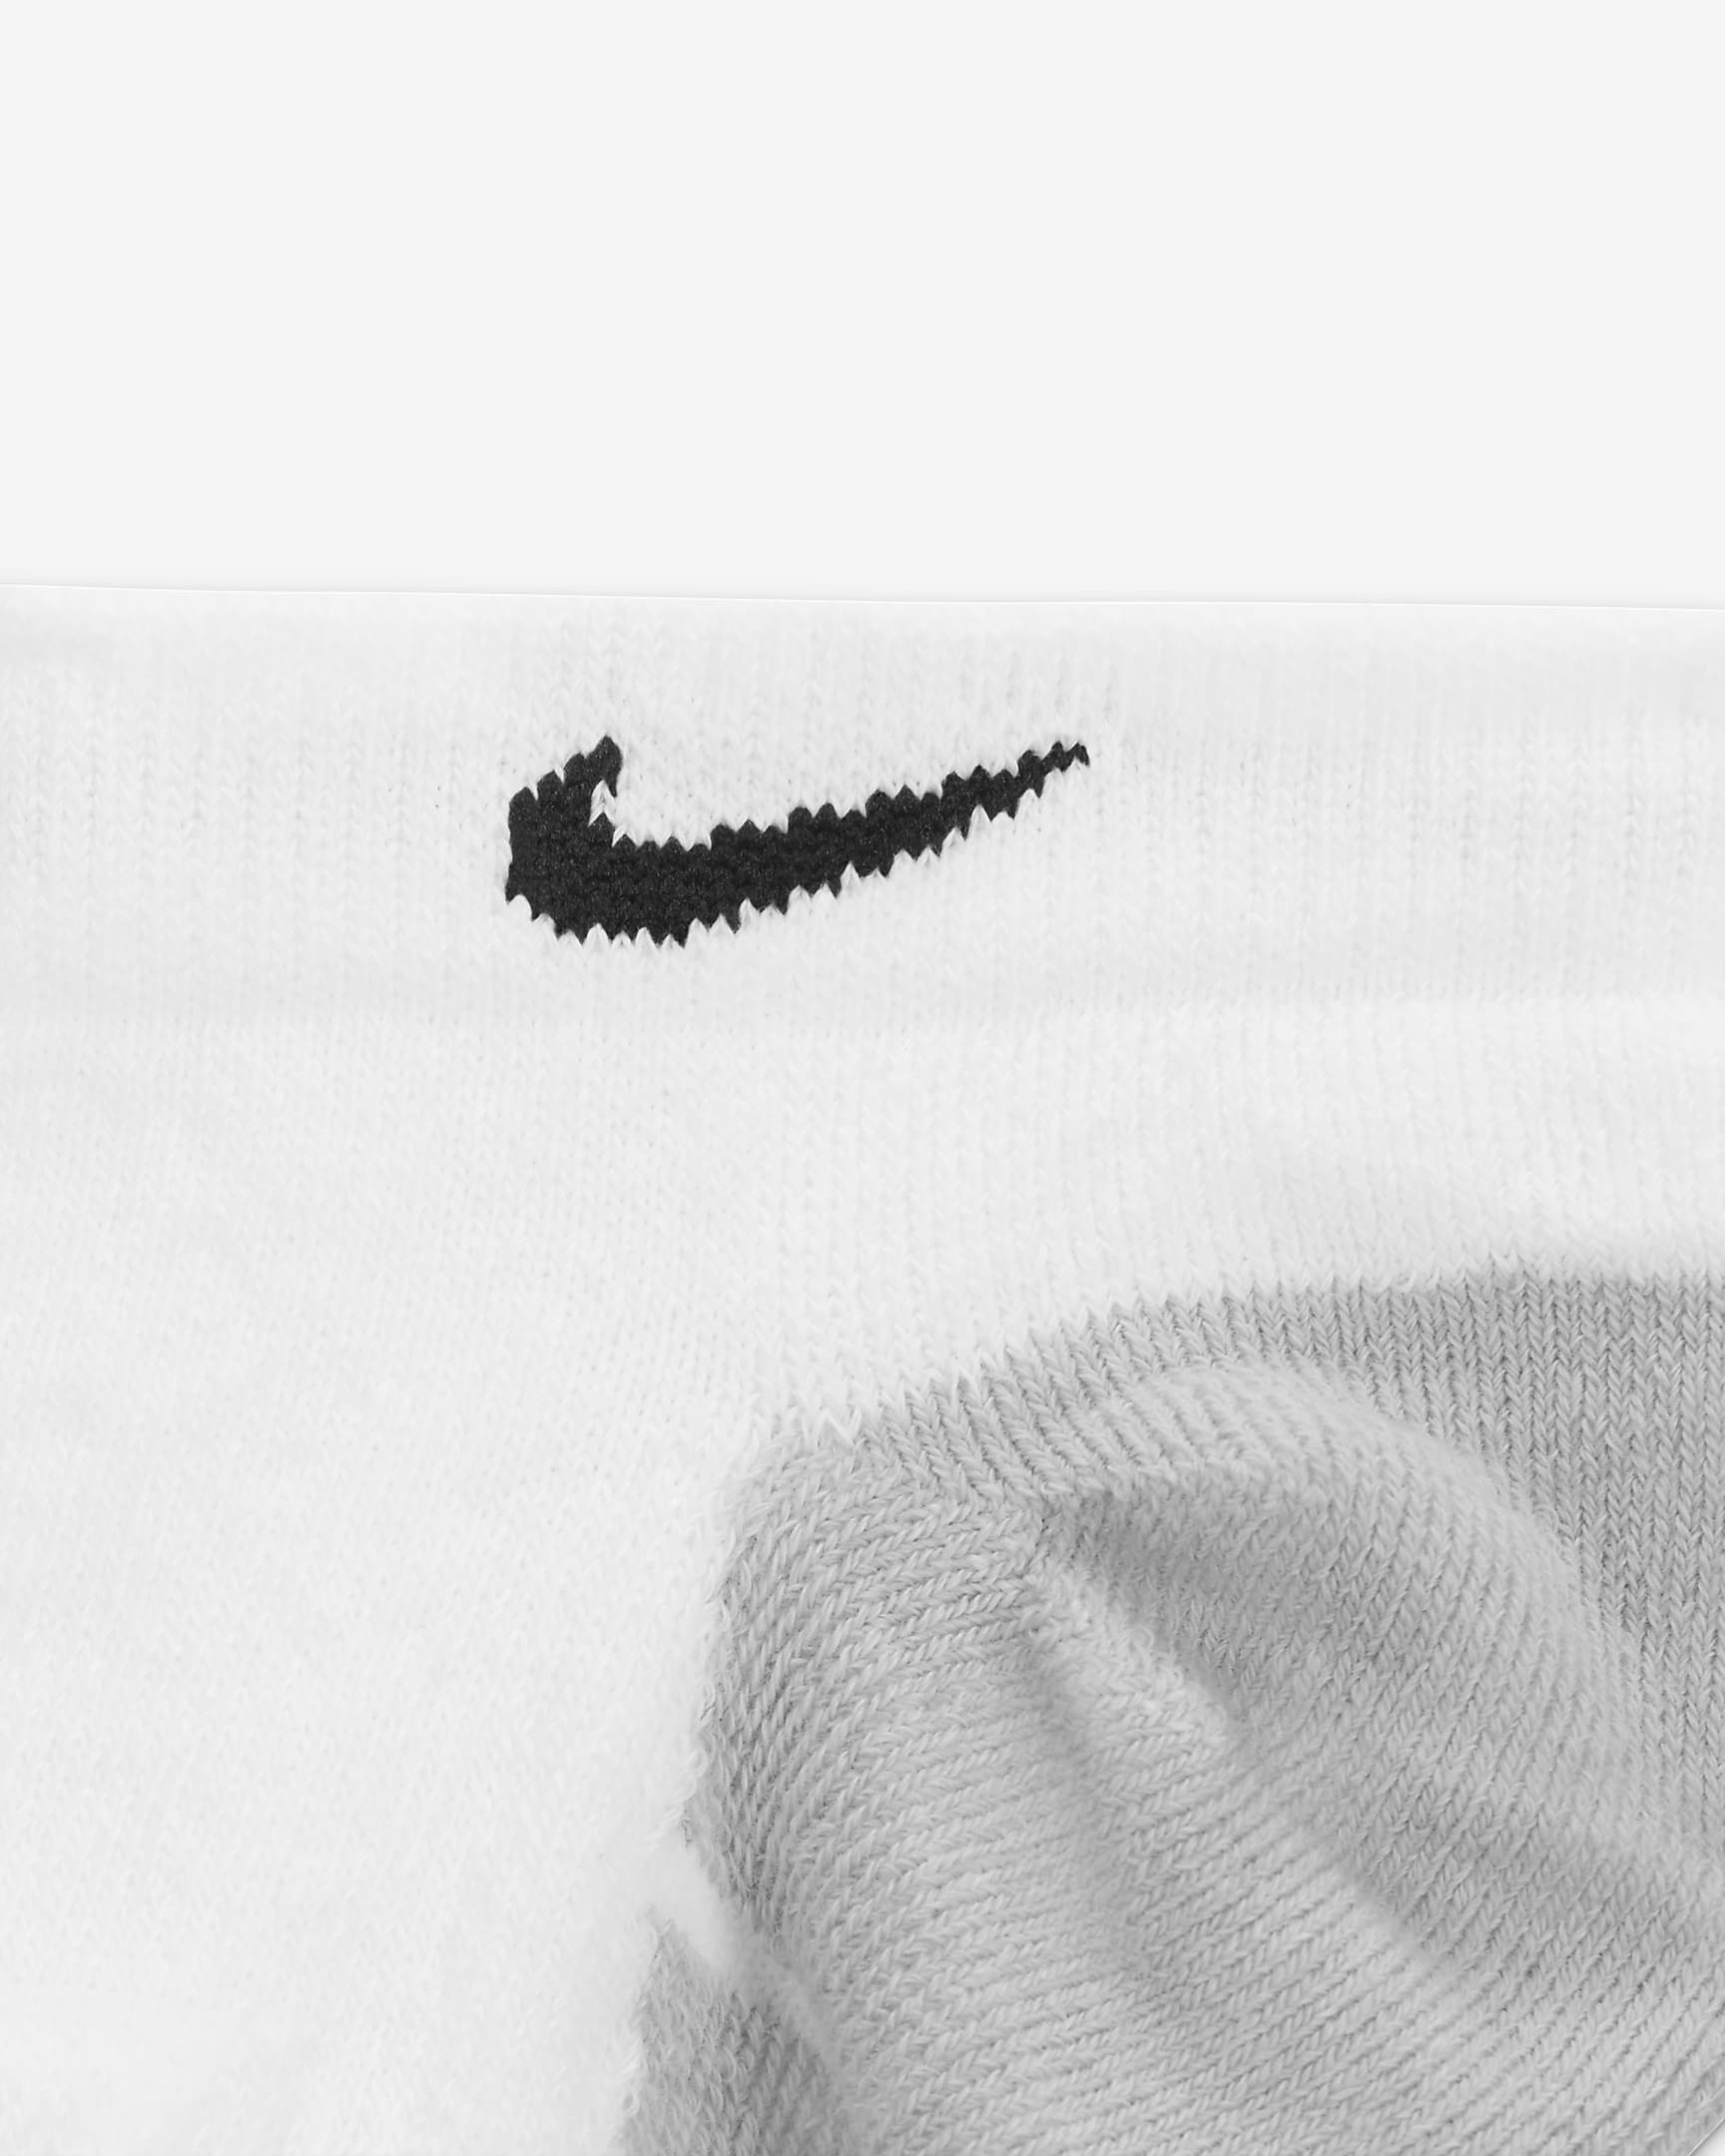 Nike Everyday Max Cushioned Training No-Show Socks (3 Pairs) - White/Wolf Grey/Black